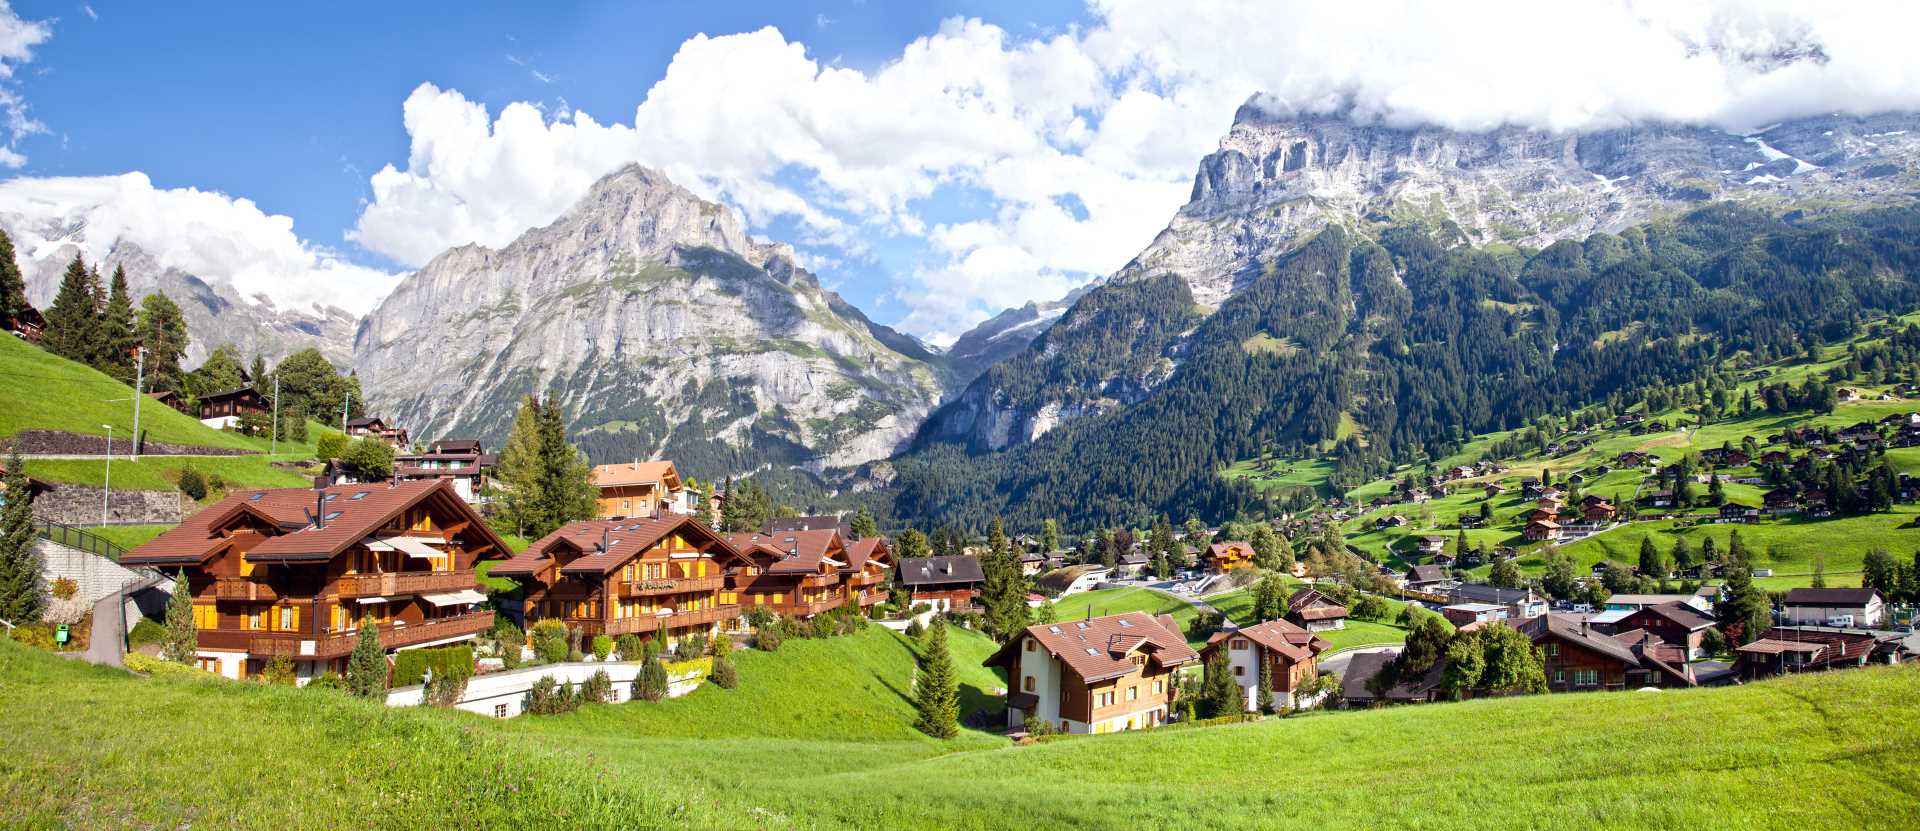 Grindelwald, Interlaken-Oberhasli, Berne, Switzerland - Campsites in Switzerland